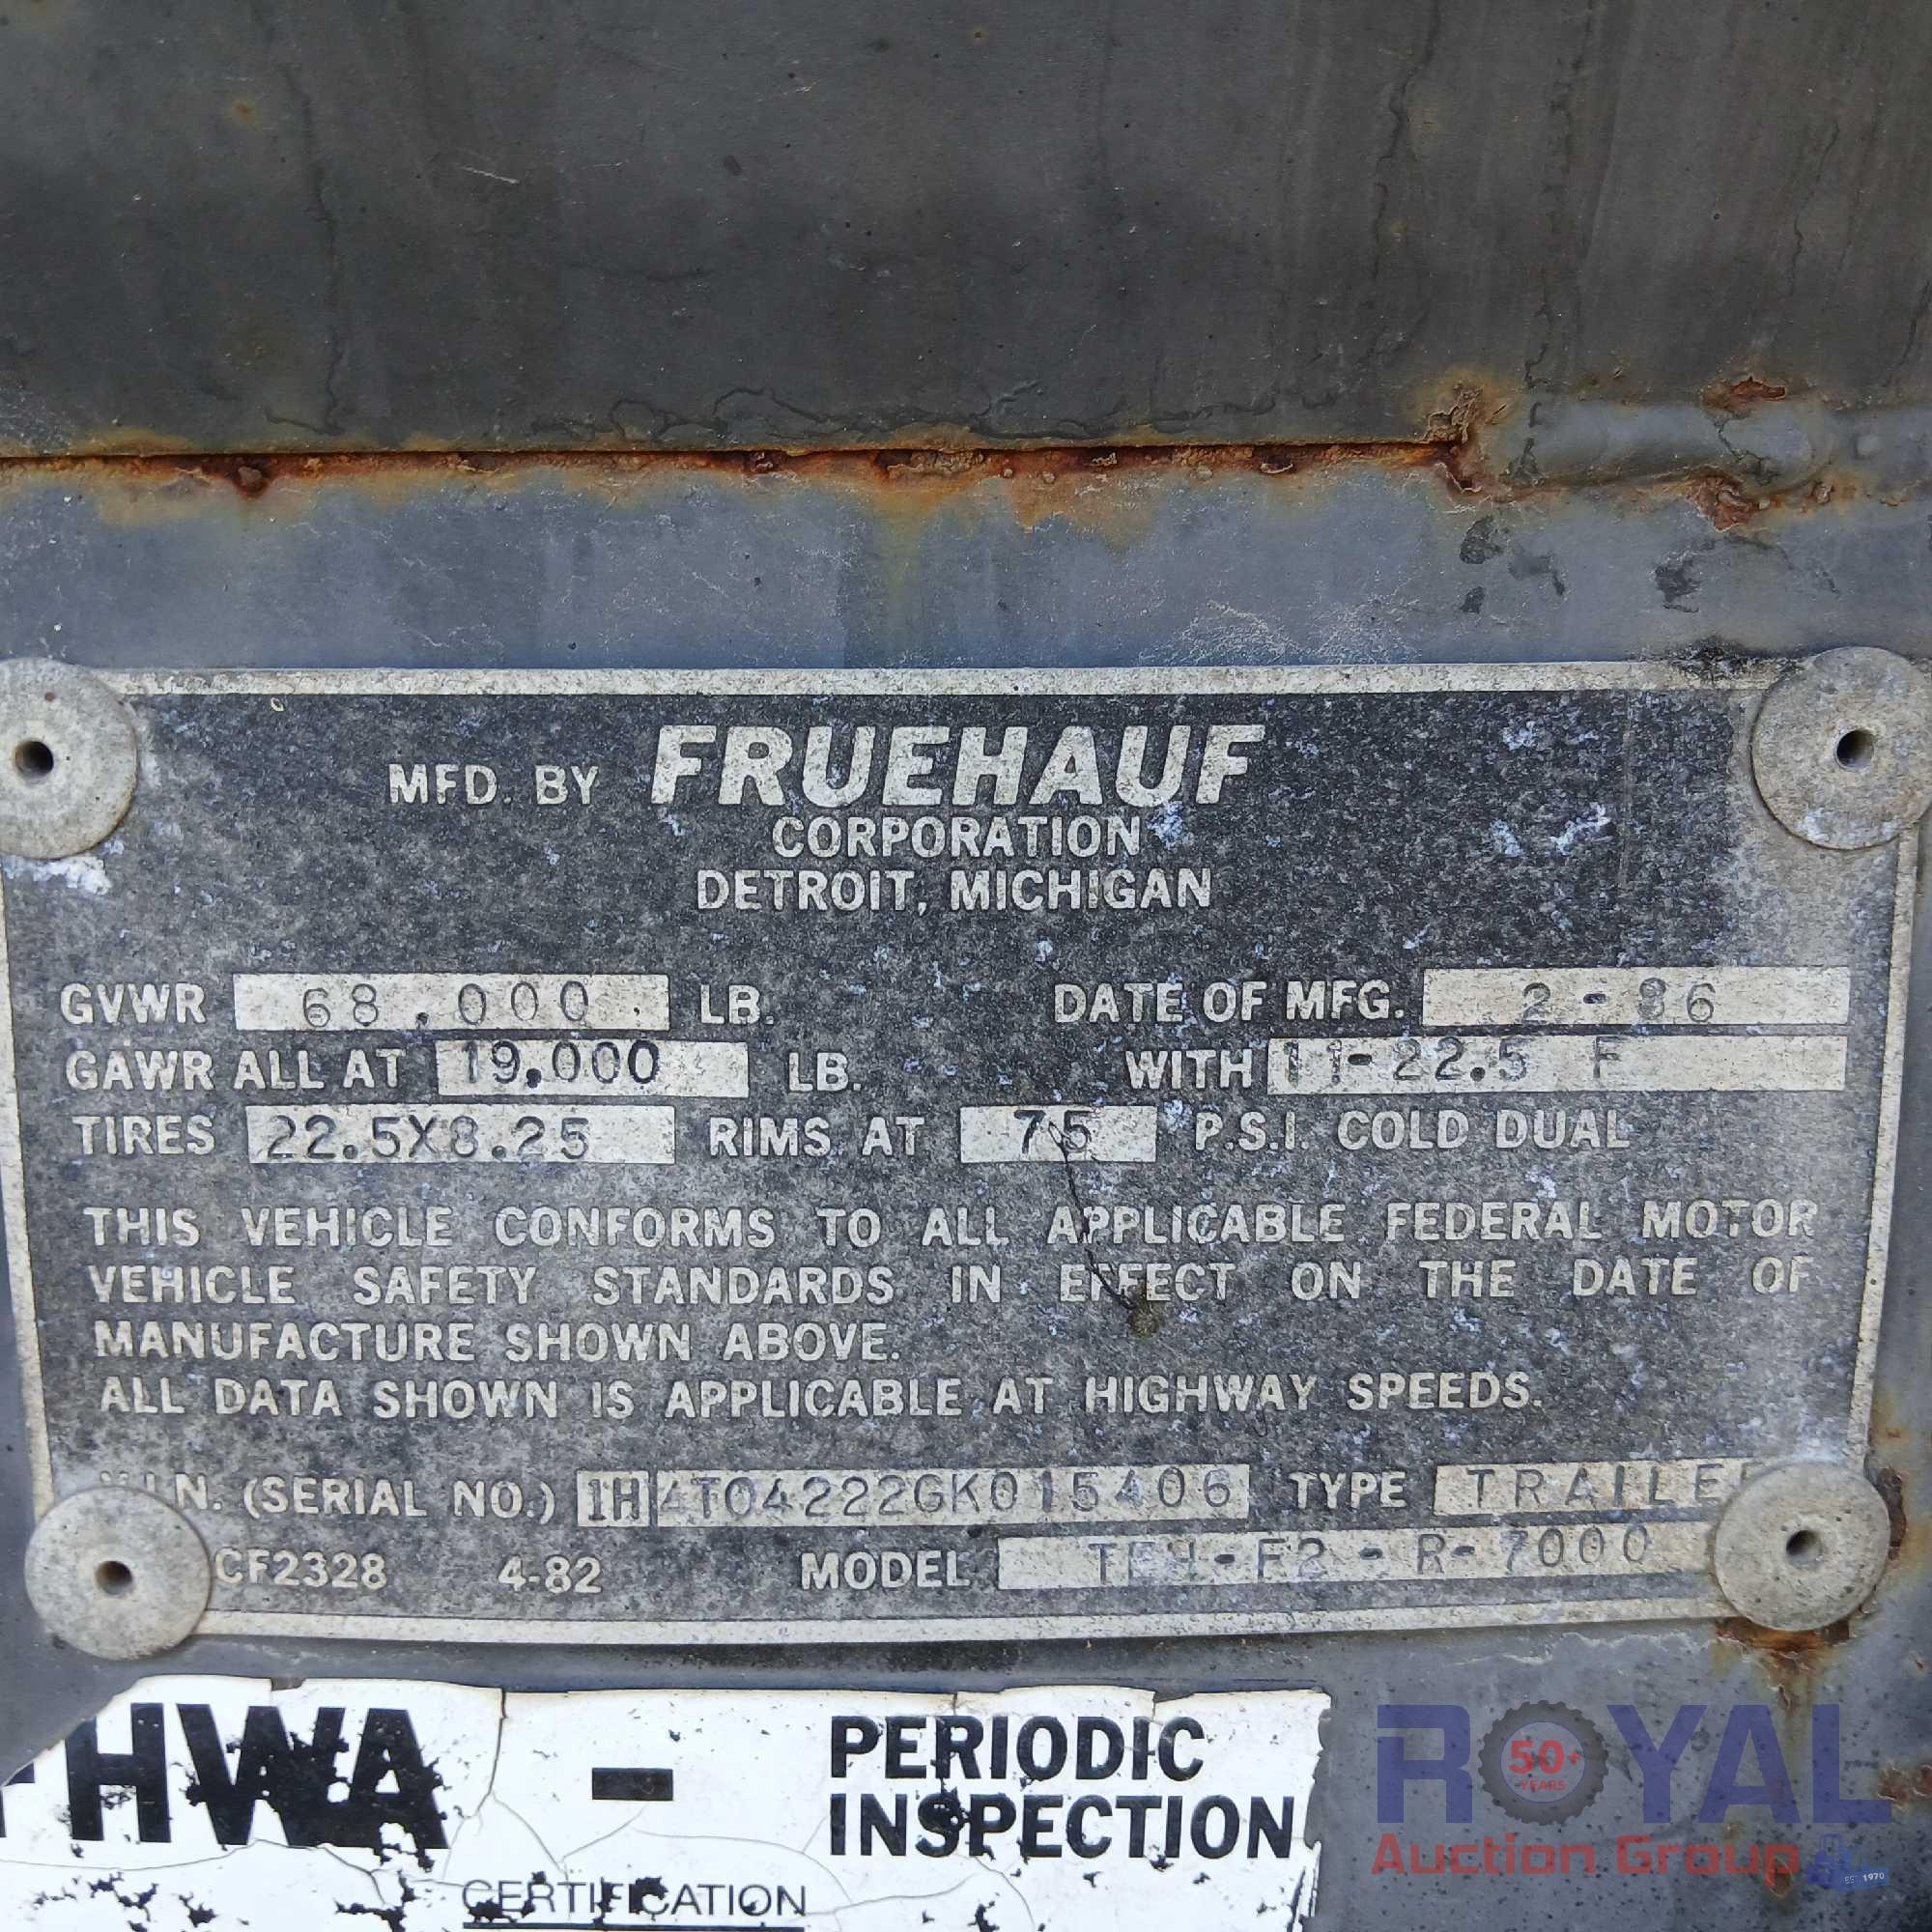 1986 Fruehauf TEH-F2-R 7,000 Gallon Tanker Trailer